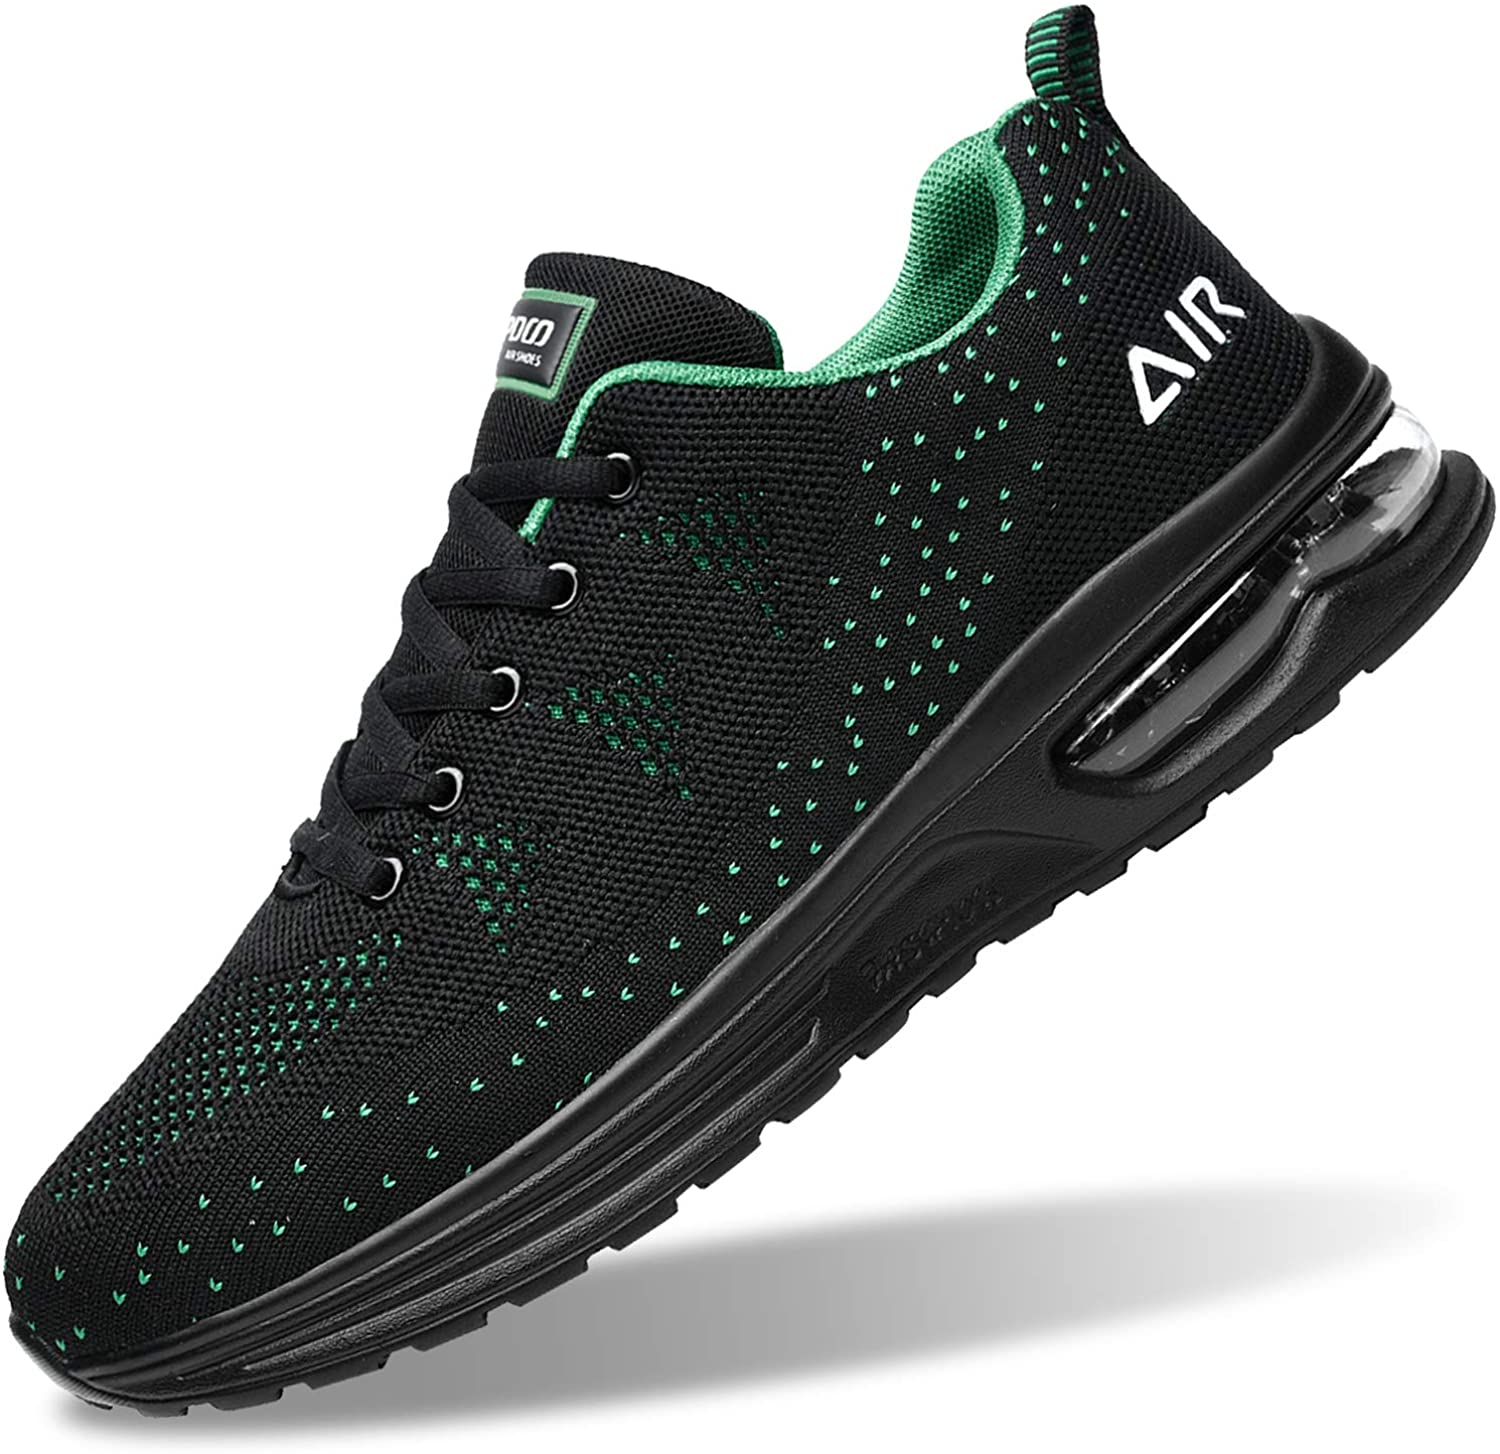 Autper Mens Air Athletic Running Tennis Shoes Lightweight Sport Gym Jogging Walking Sneakers US 6.5-US12.5 